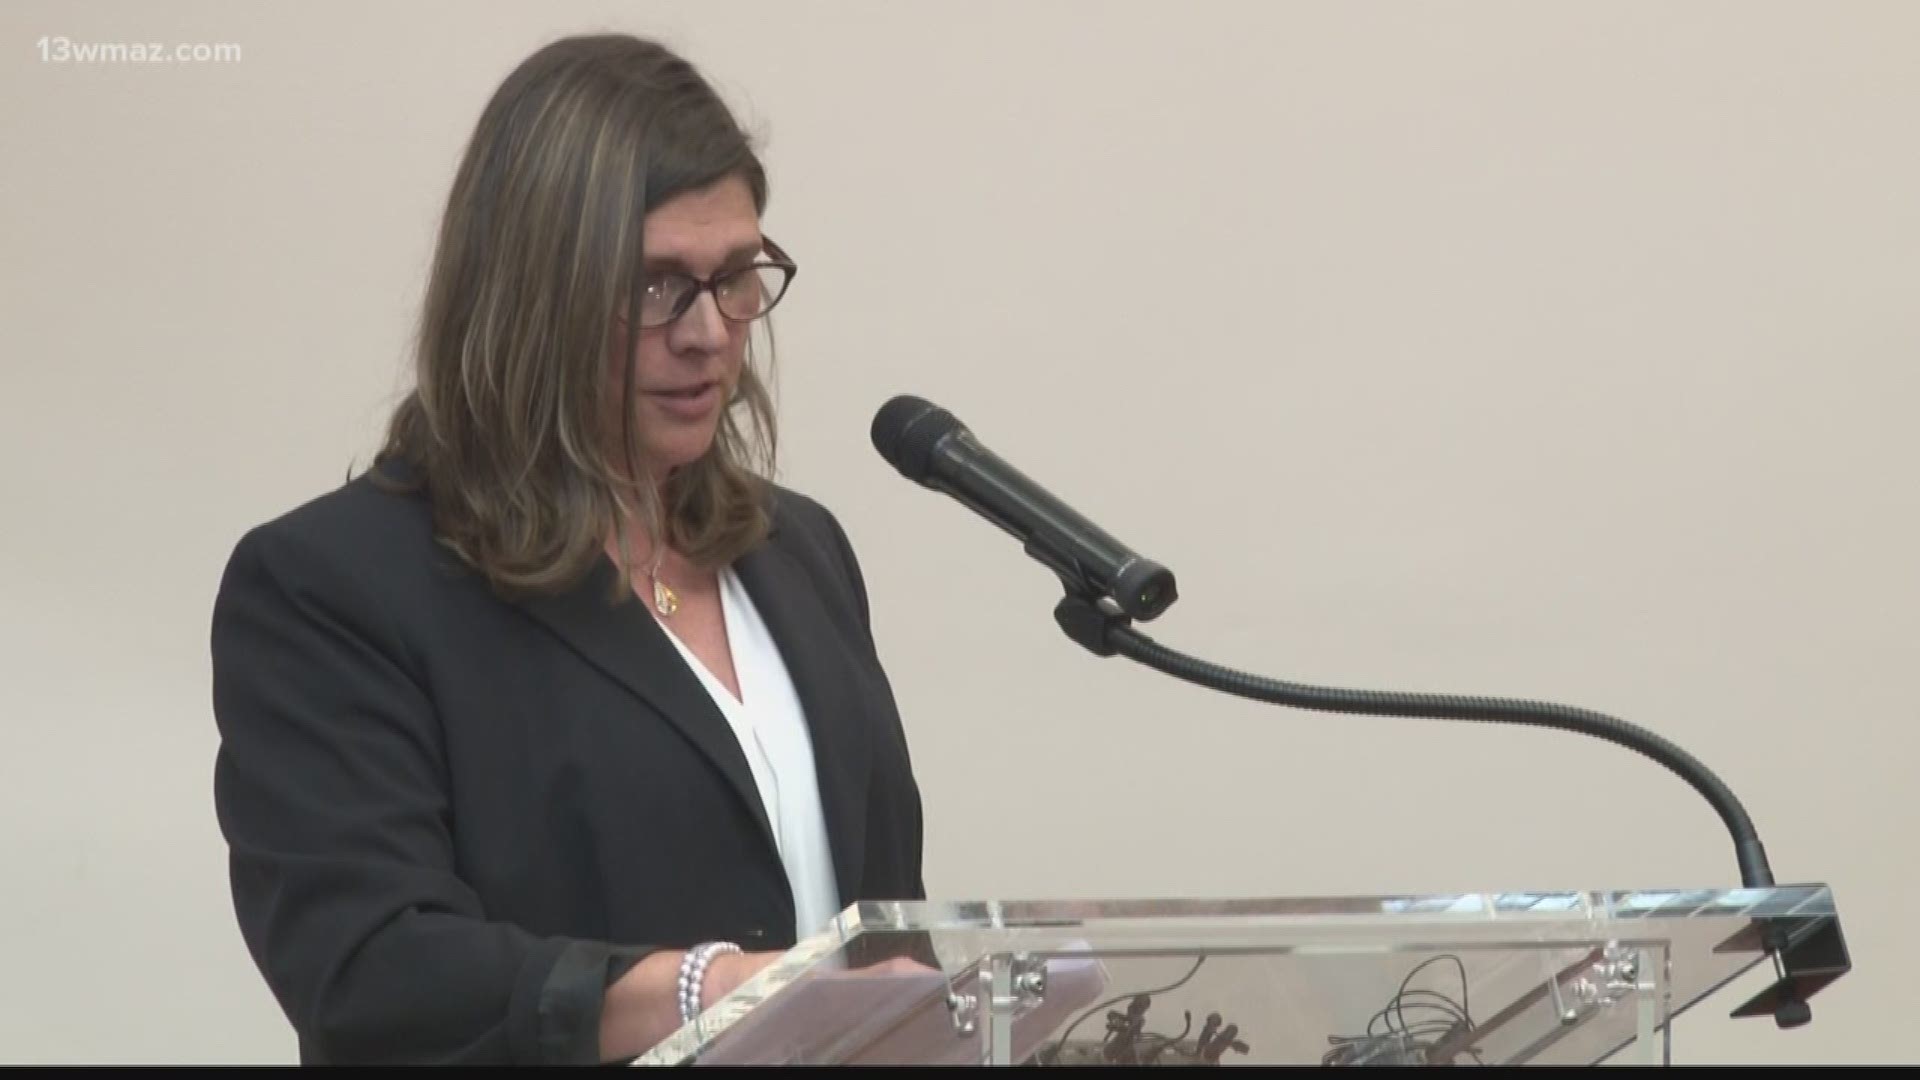 Transgender deputy addresses council